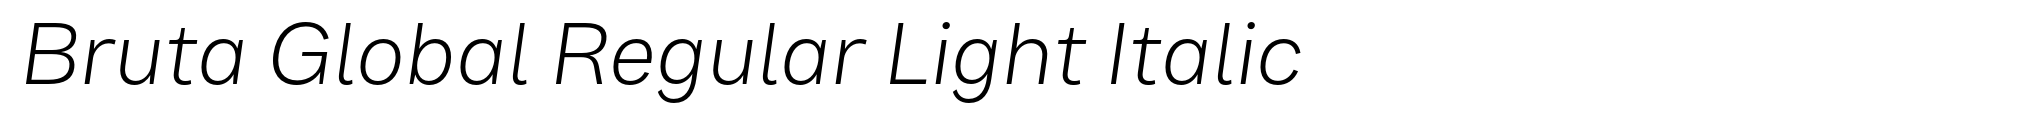 Bruta Global Regular Light Italic image